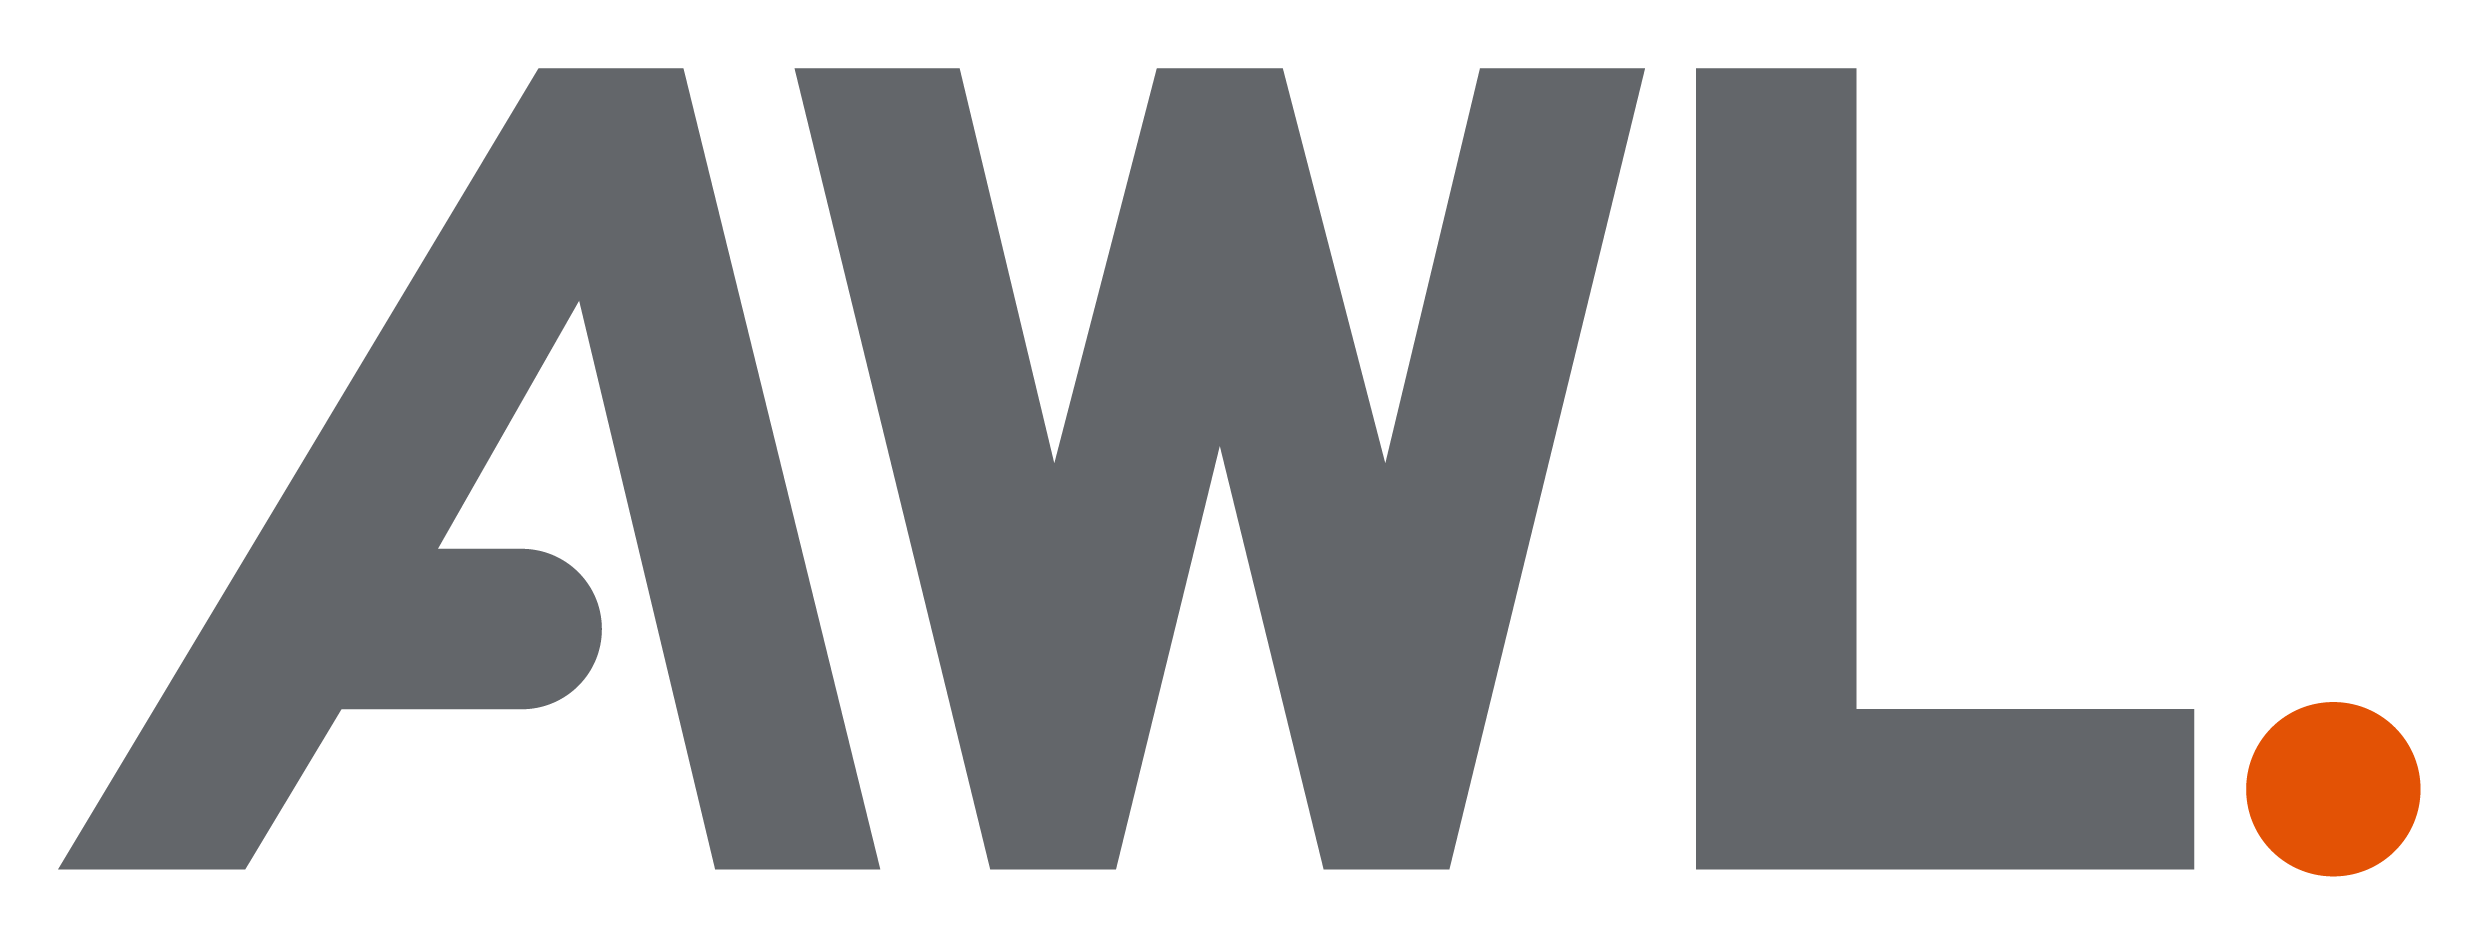 AWL logo